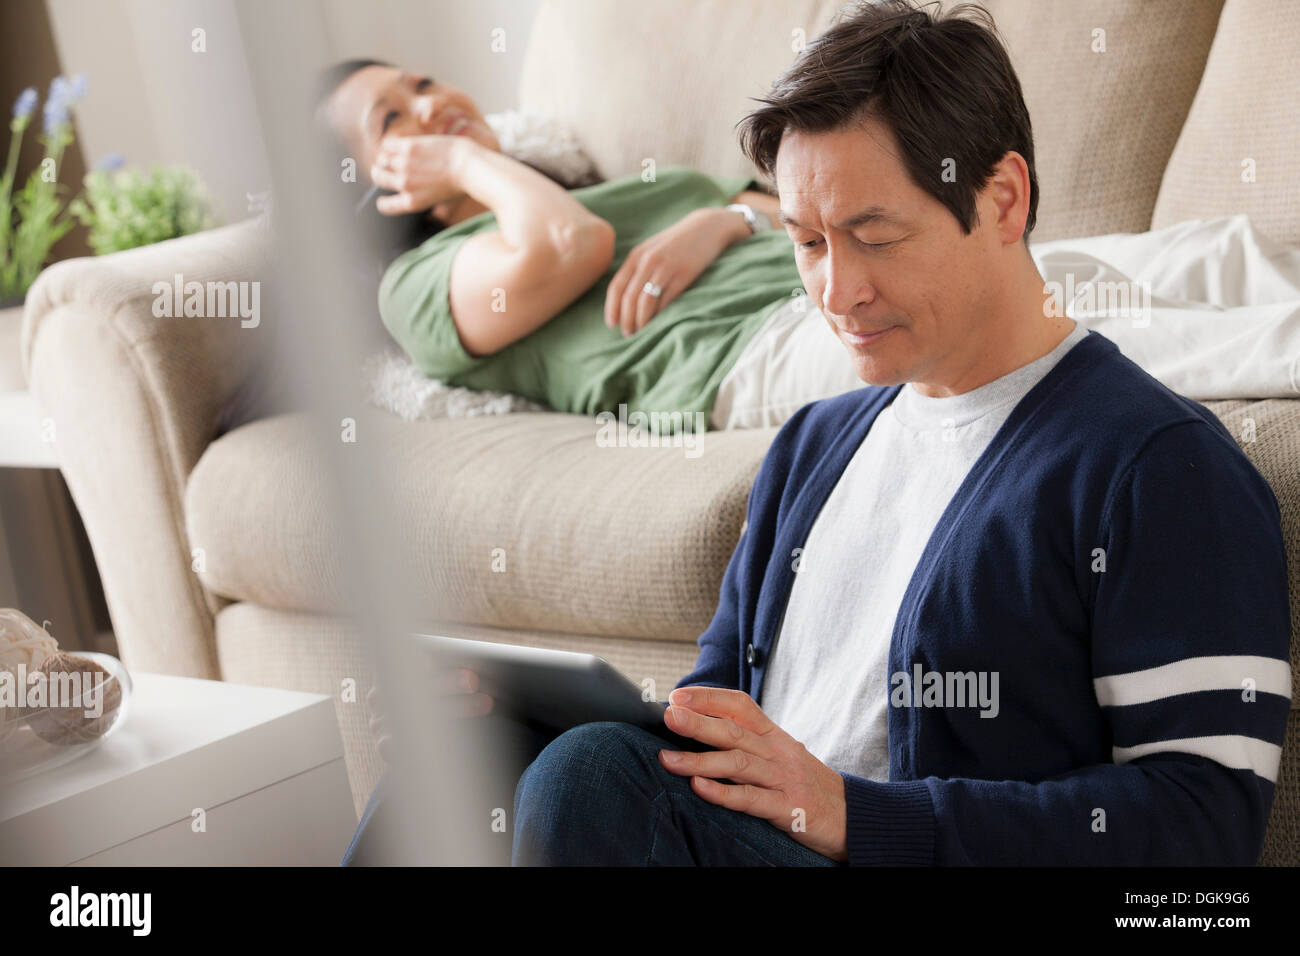 Mature man using digital tablet, woman lying on sofa Stock Photo